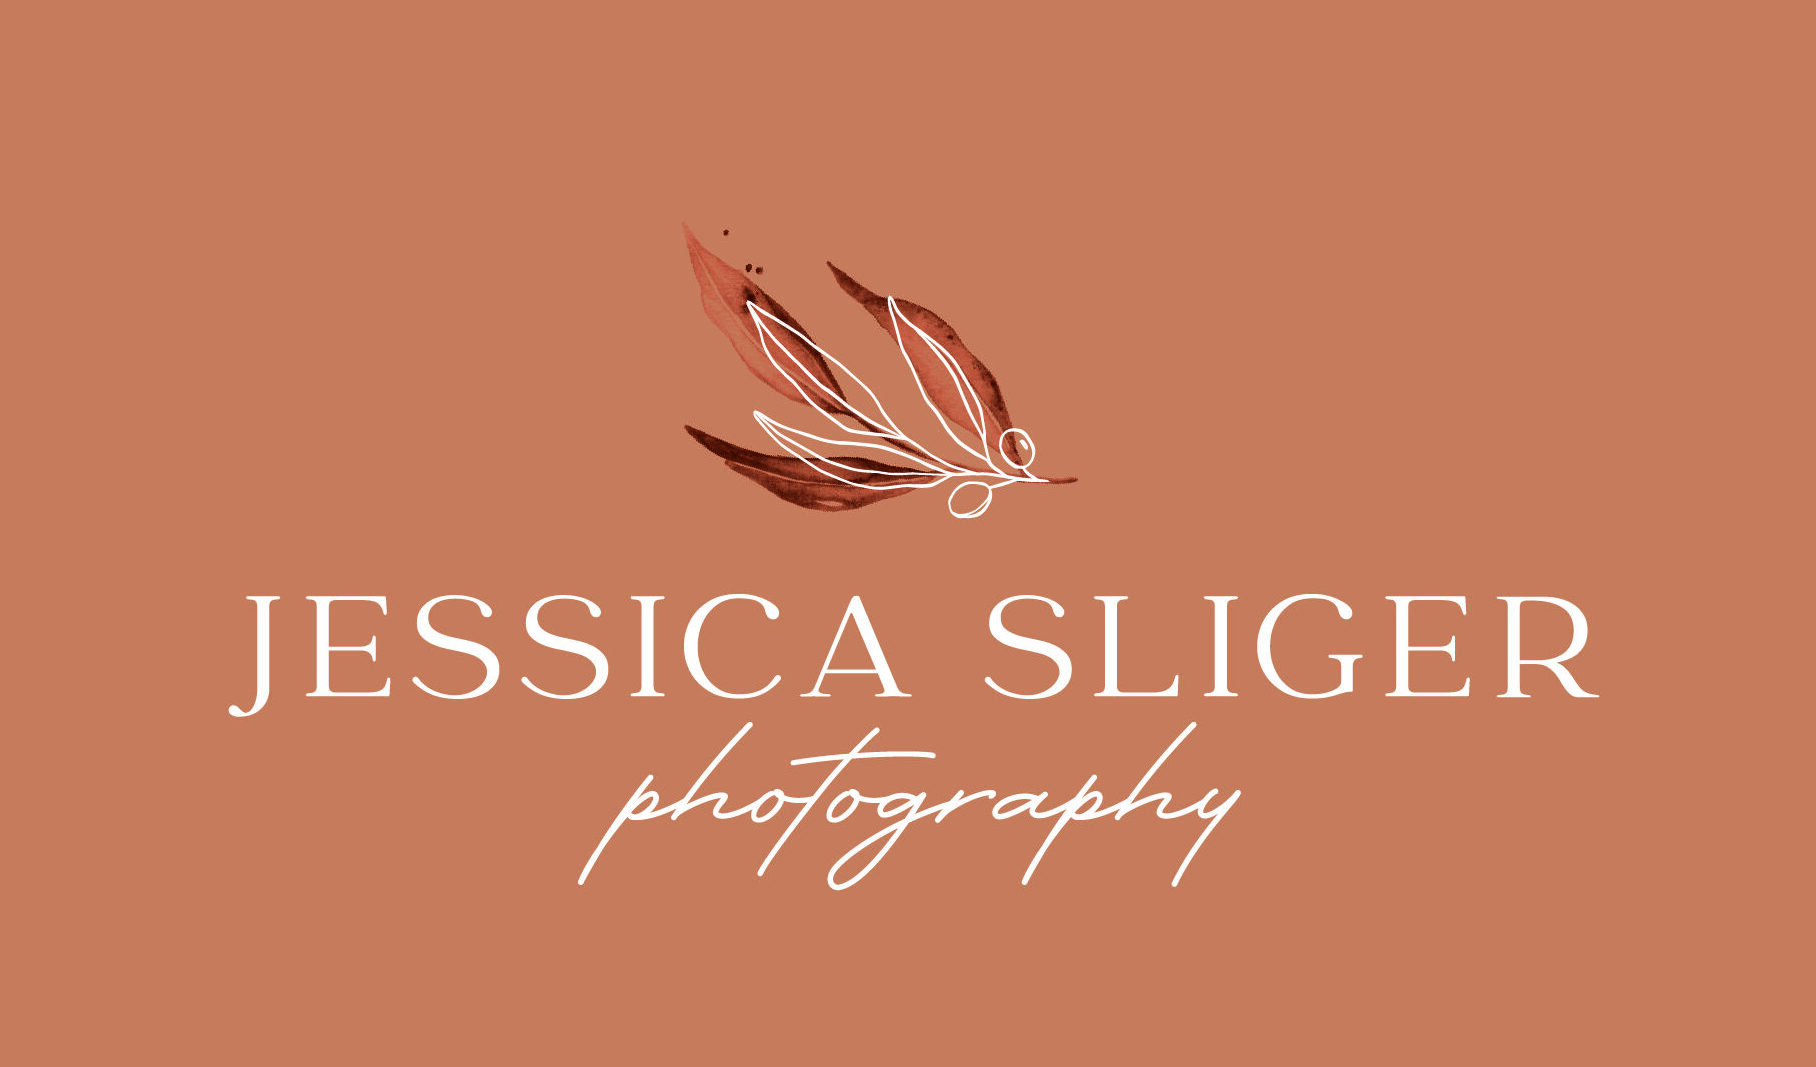 Jessica Sliger Photography